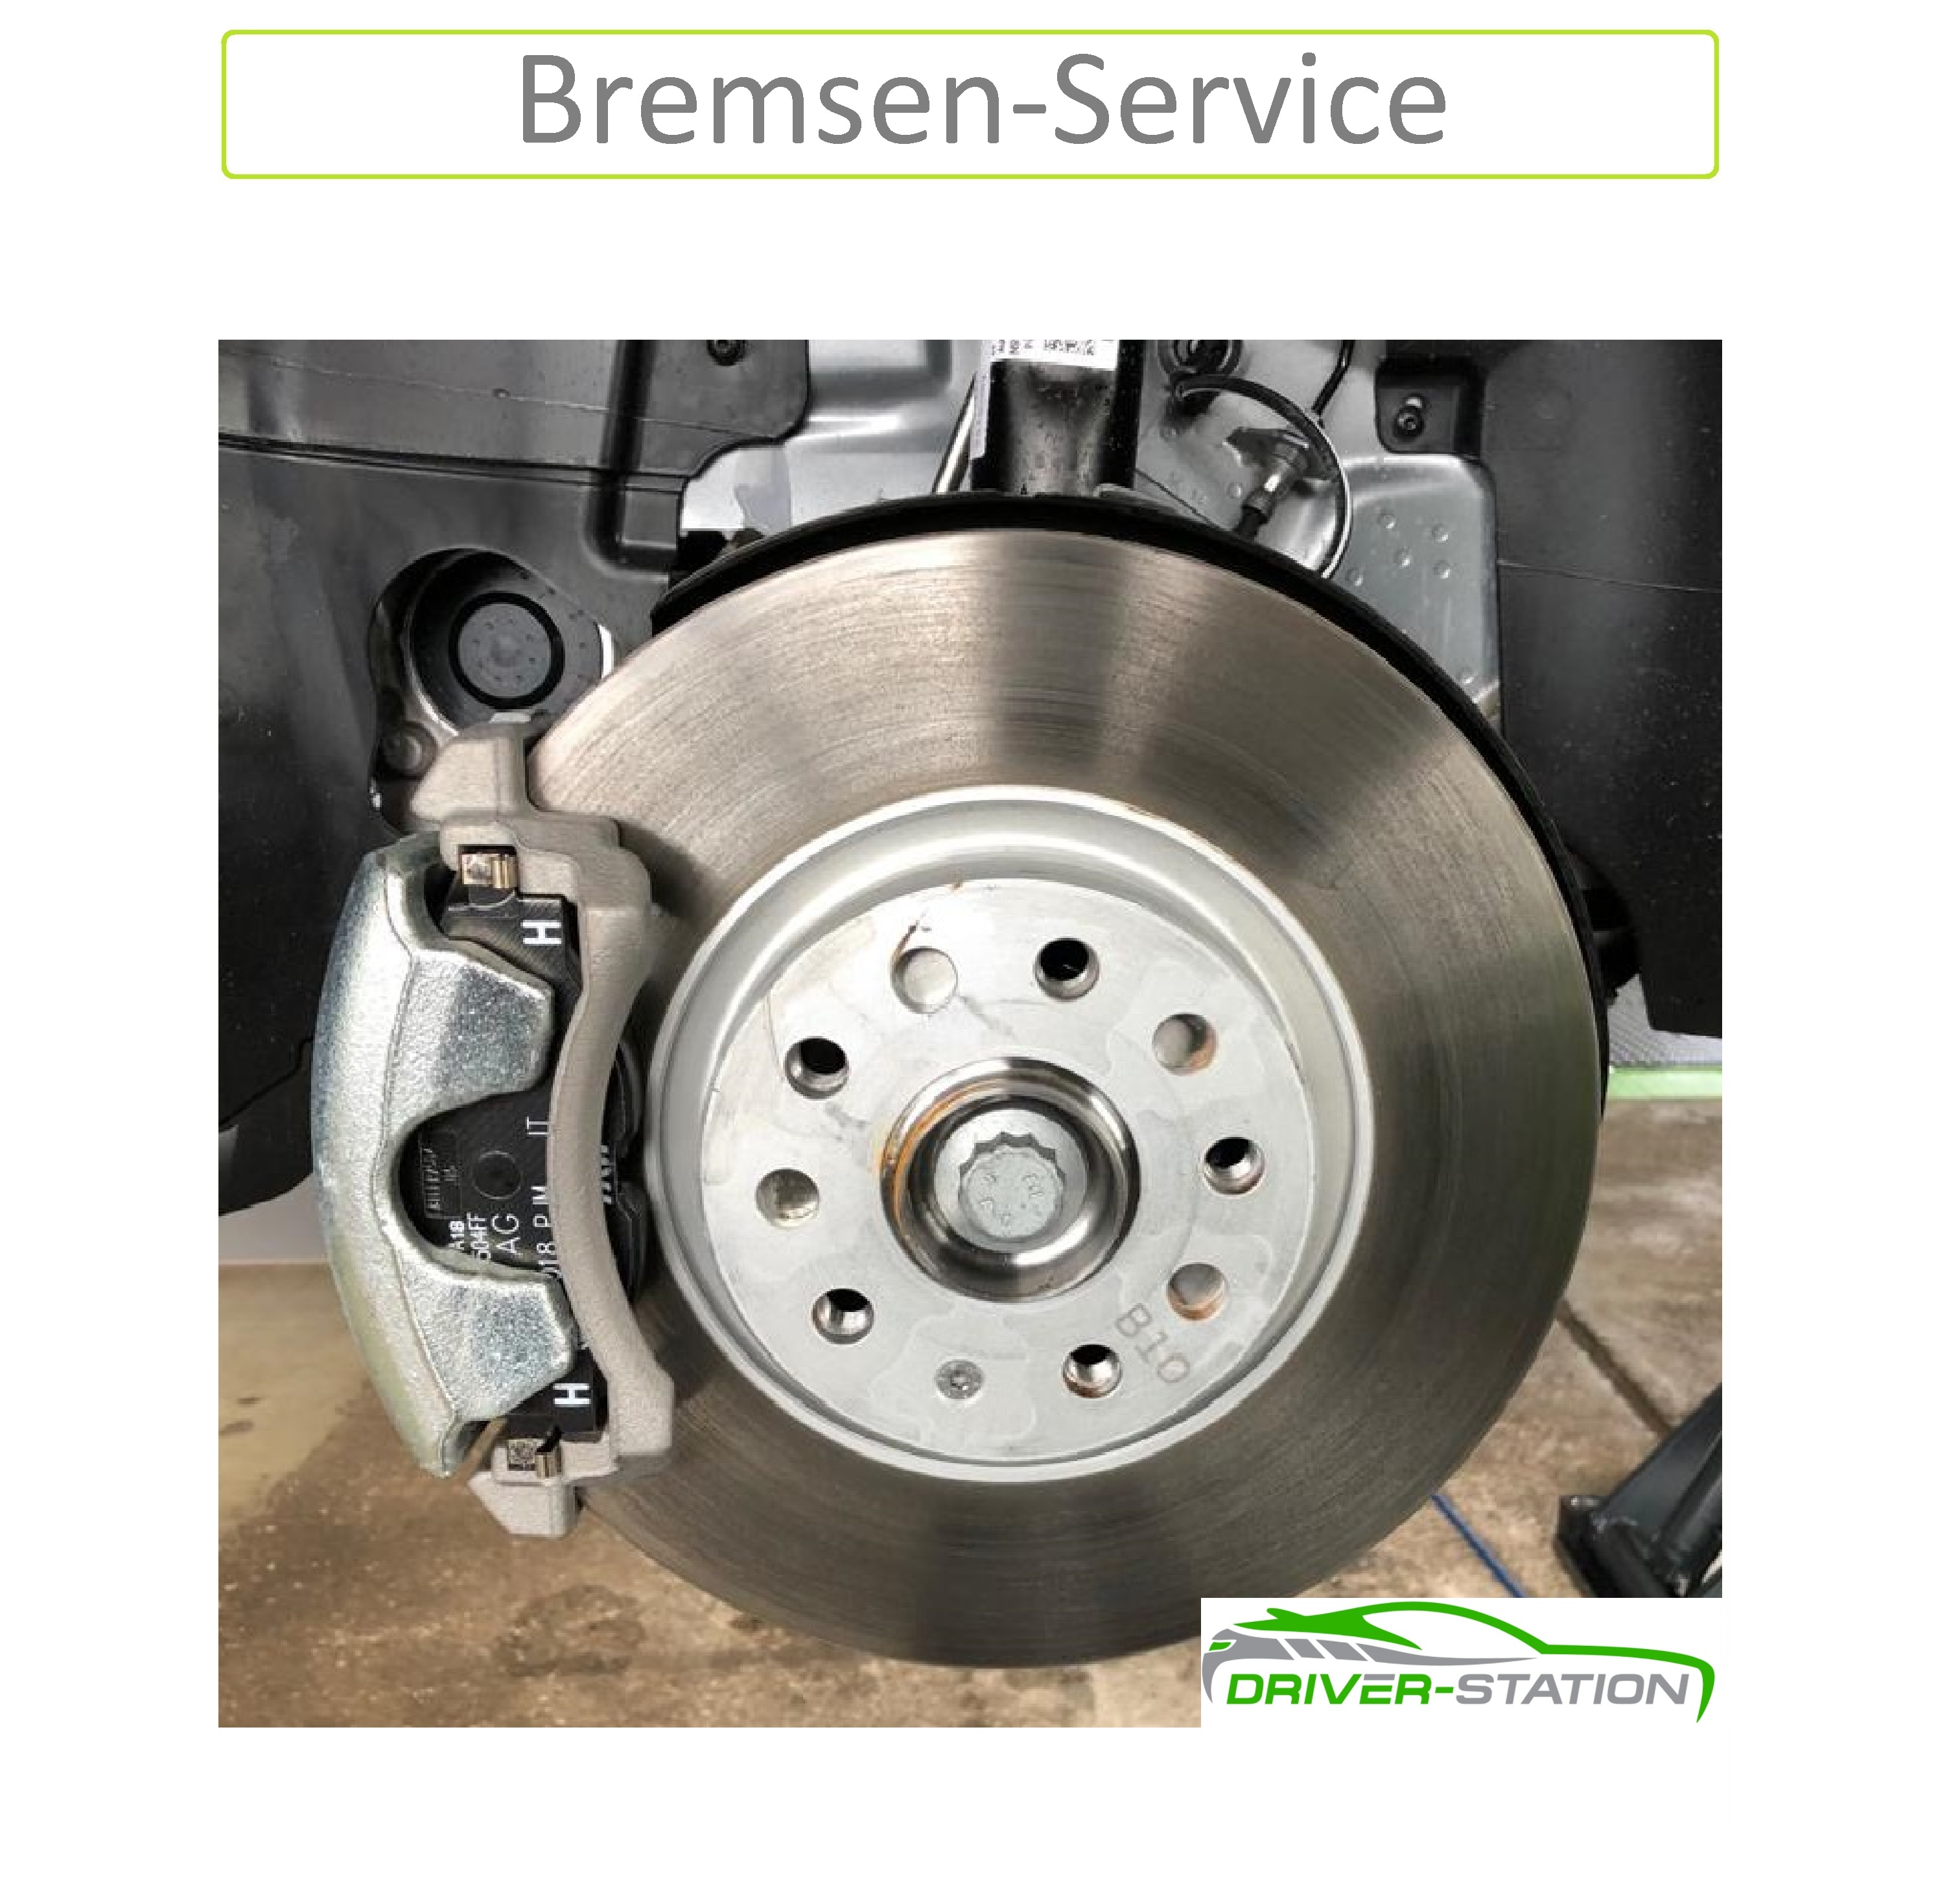 Bremsen-Service